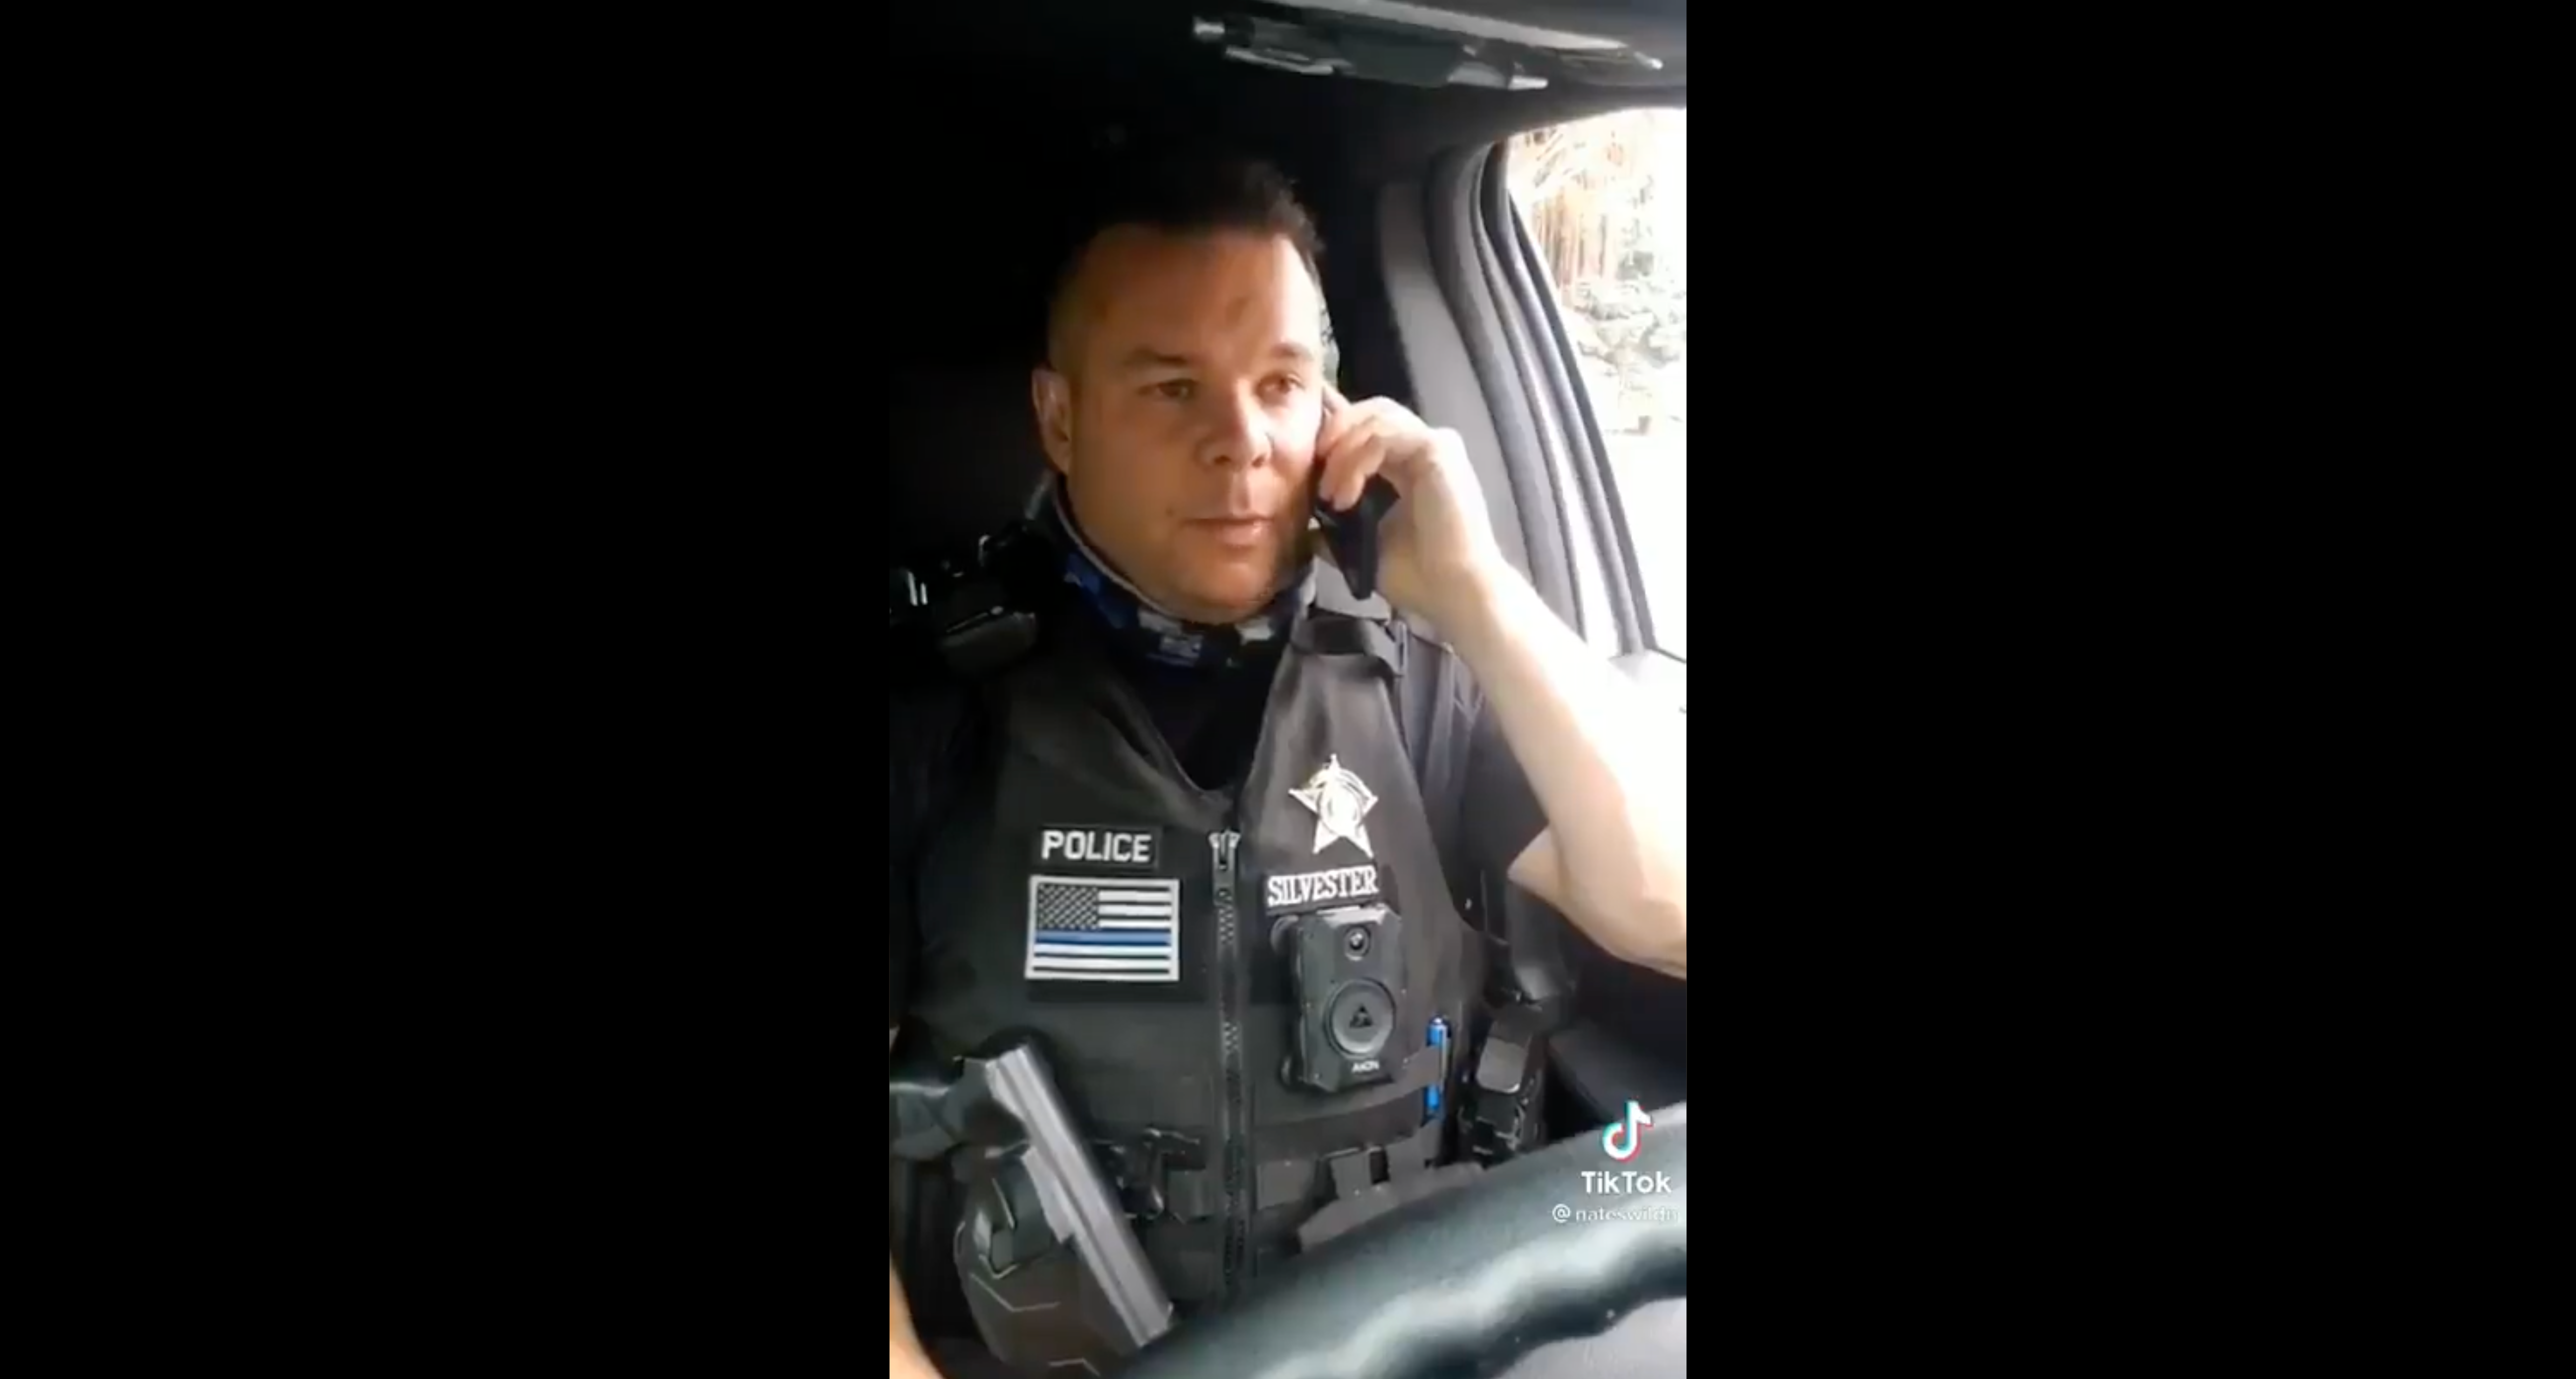 An Ohio police officer’s TikTok responding to LeBron James has gone viral